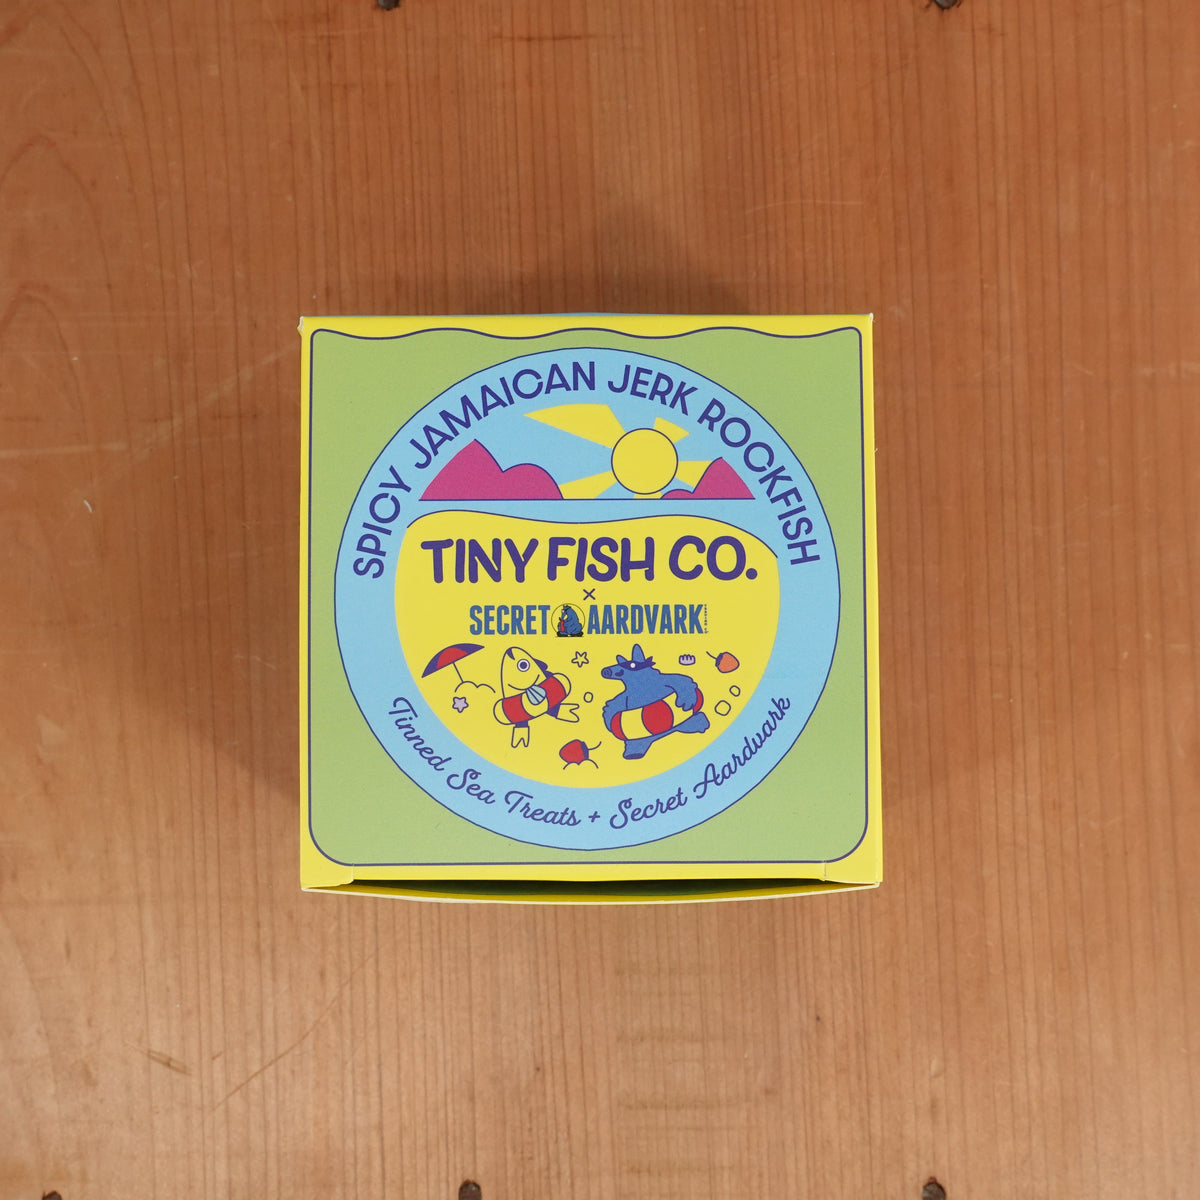 Tiny Fish Co. Spicy Jamaican Jerk Rockfish - 3.5oz